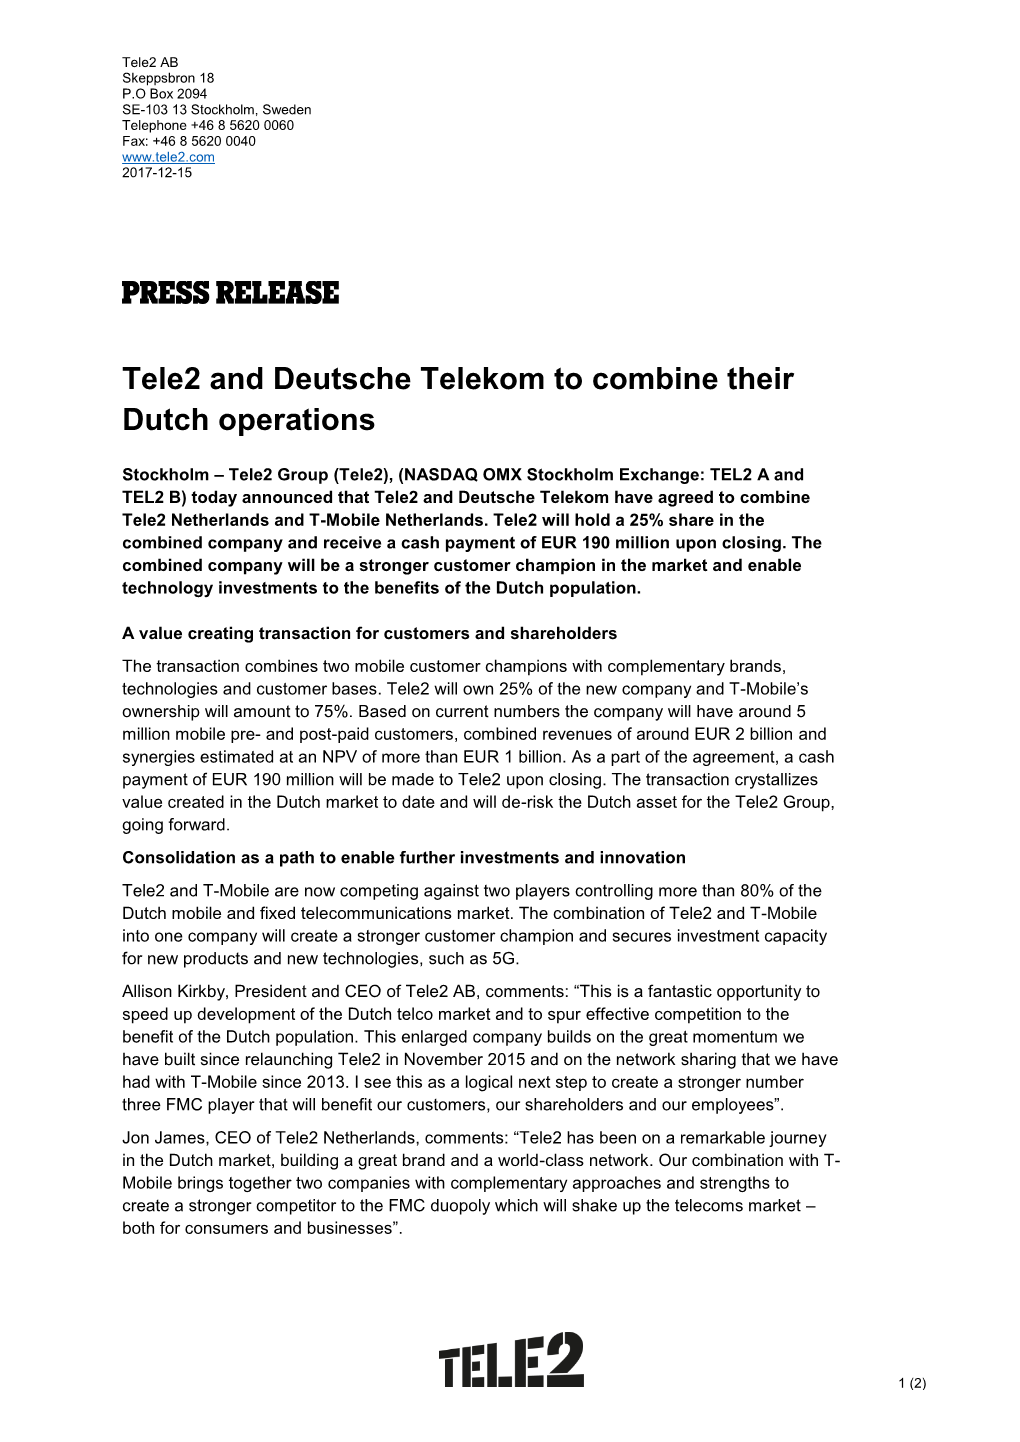 Tele2 and Deutsche Telekom to Combine Their Dutch Operations